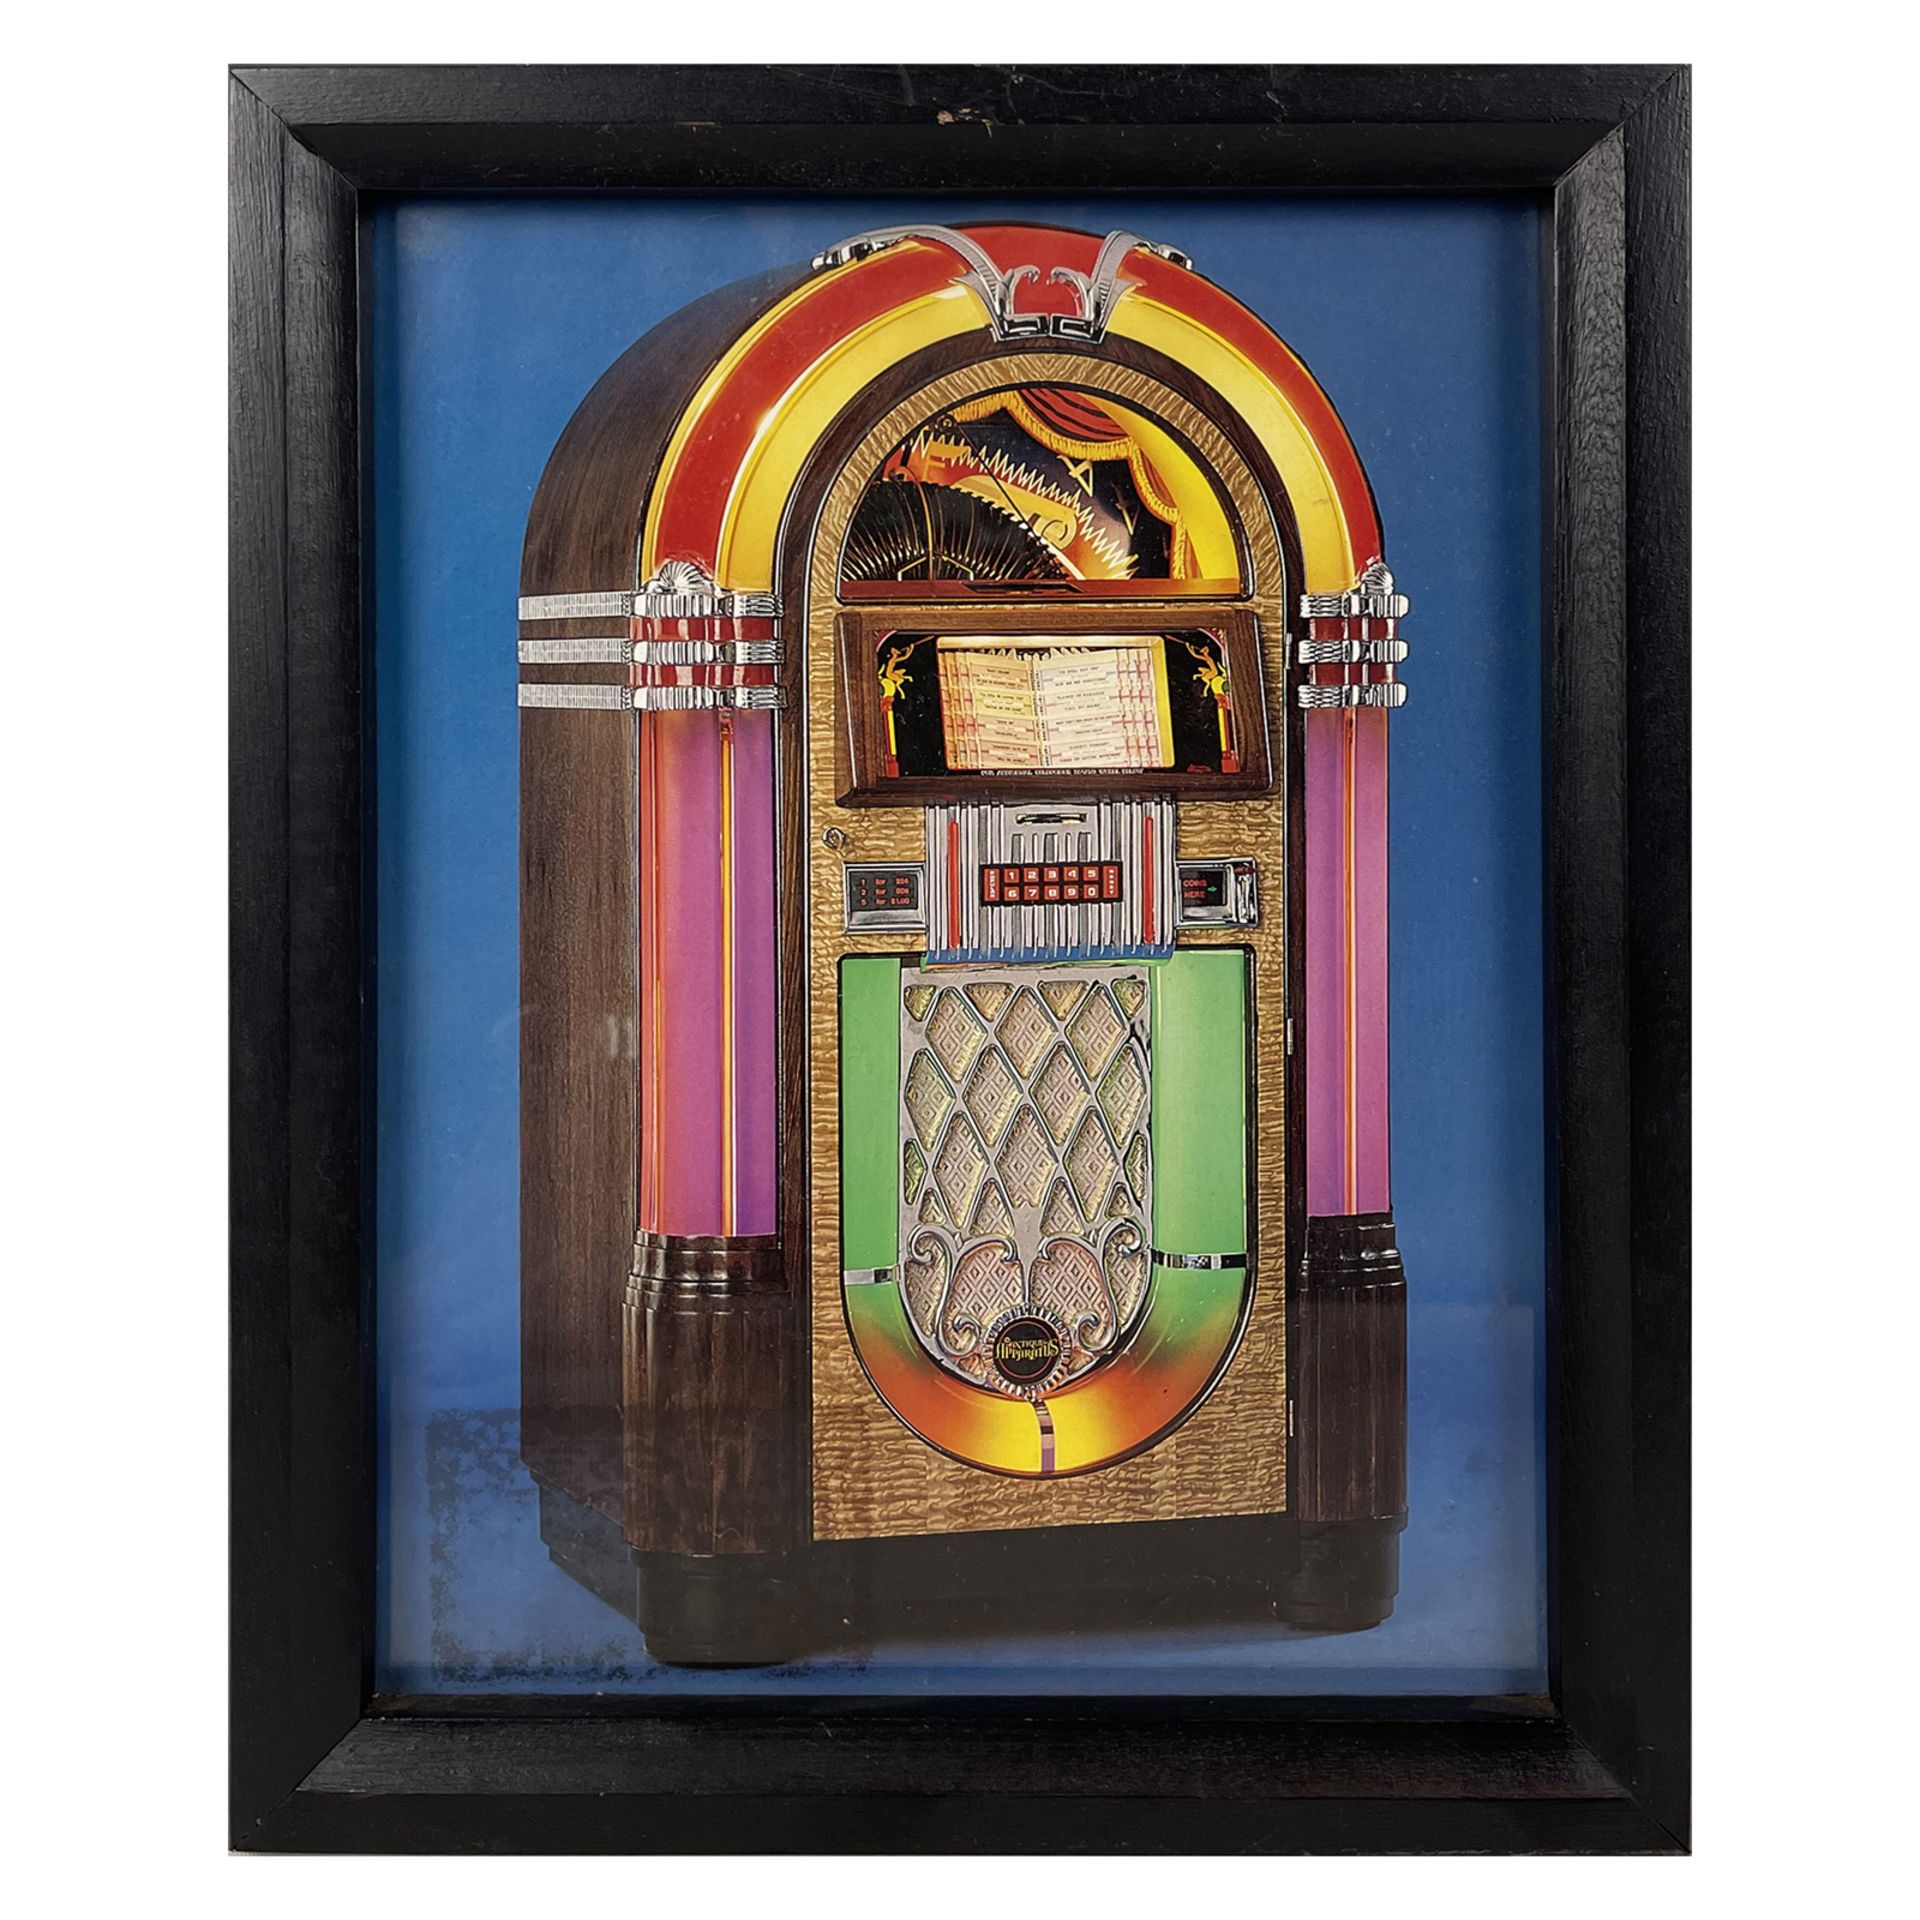 Framed Antique Apparatus "Bubbler" Jukebox Poster